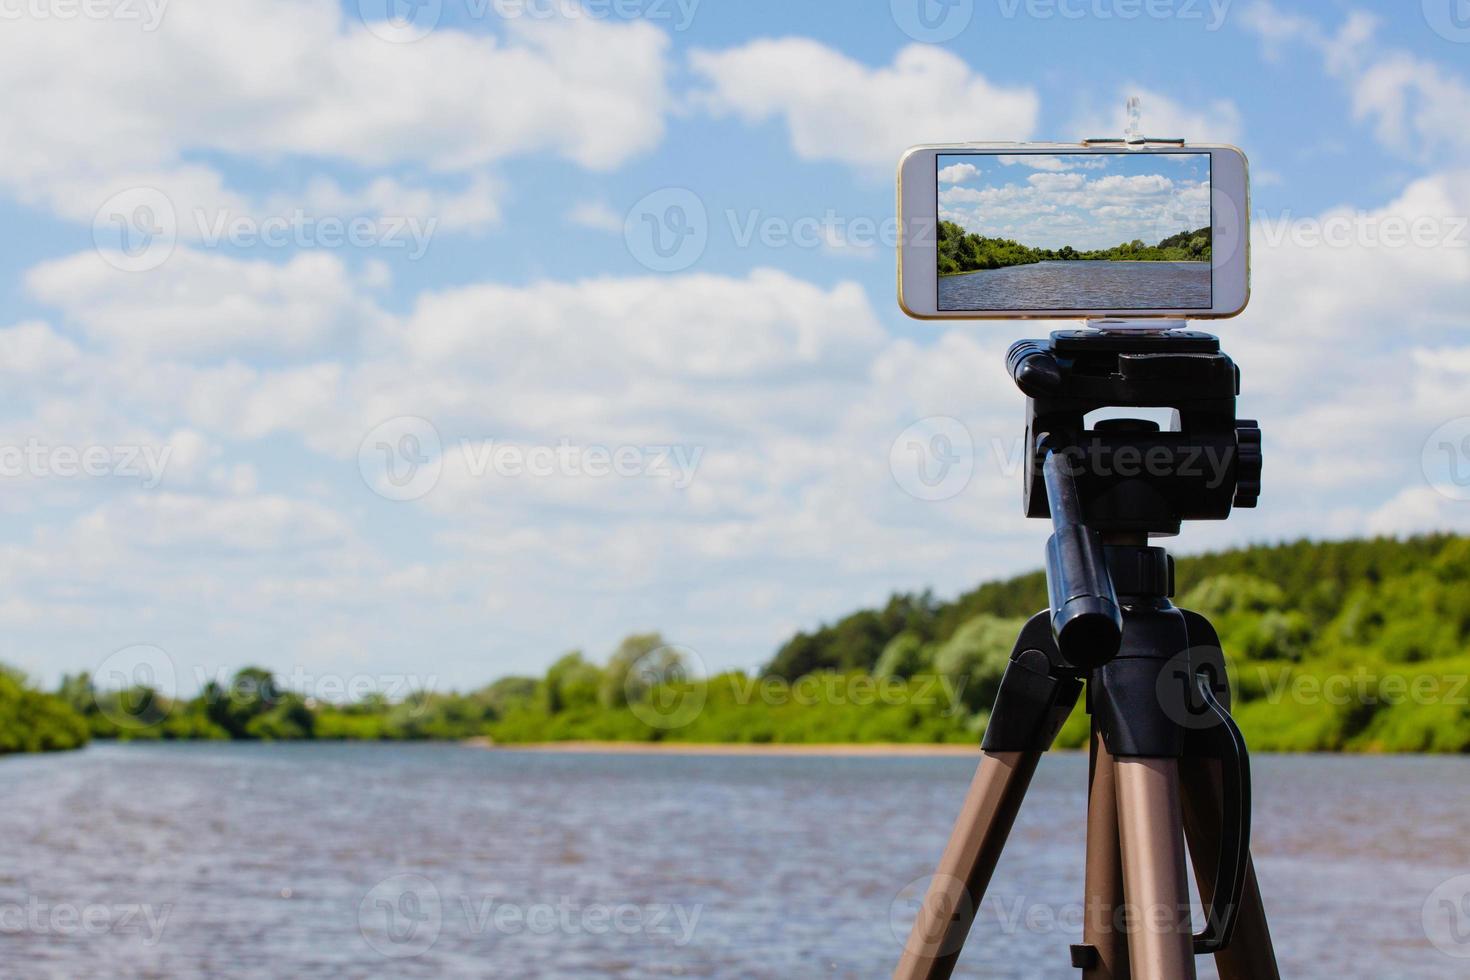 Using smartphone like professional photo camera on tripod